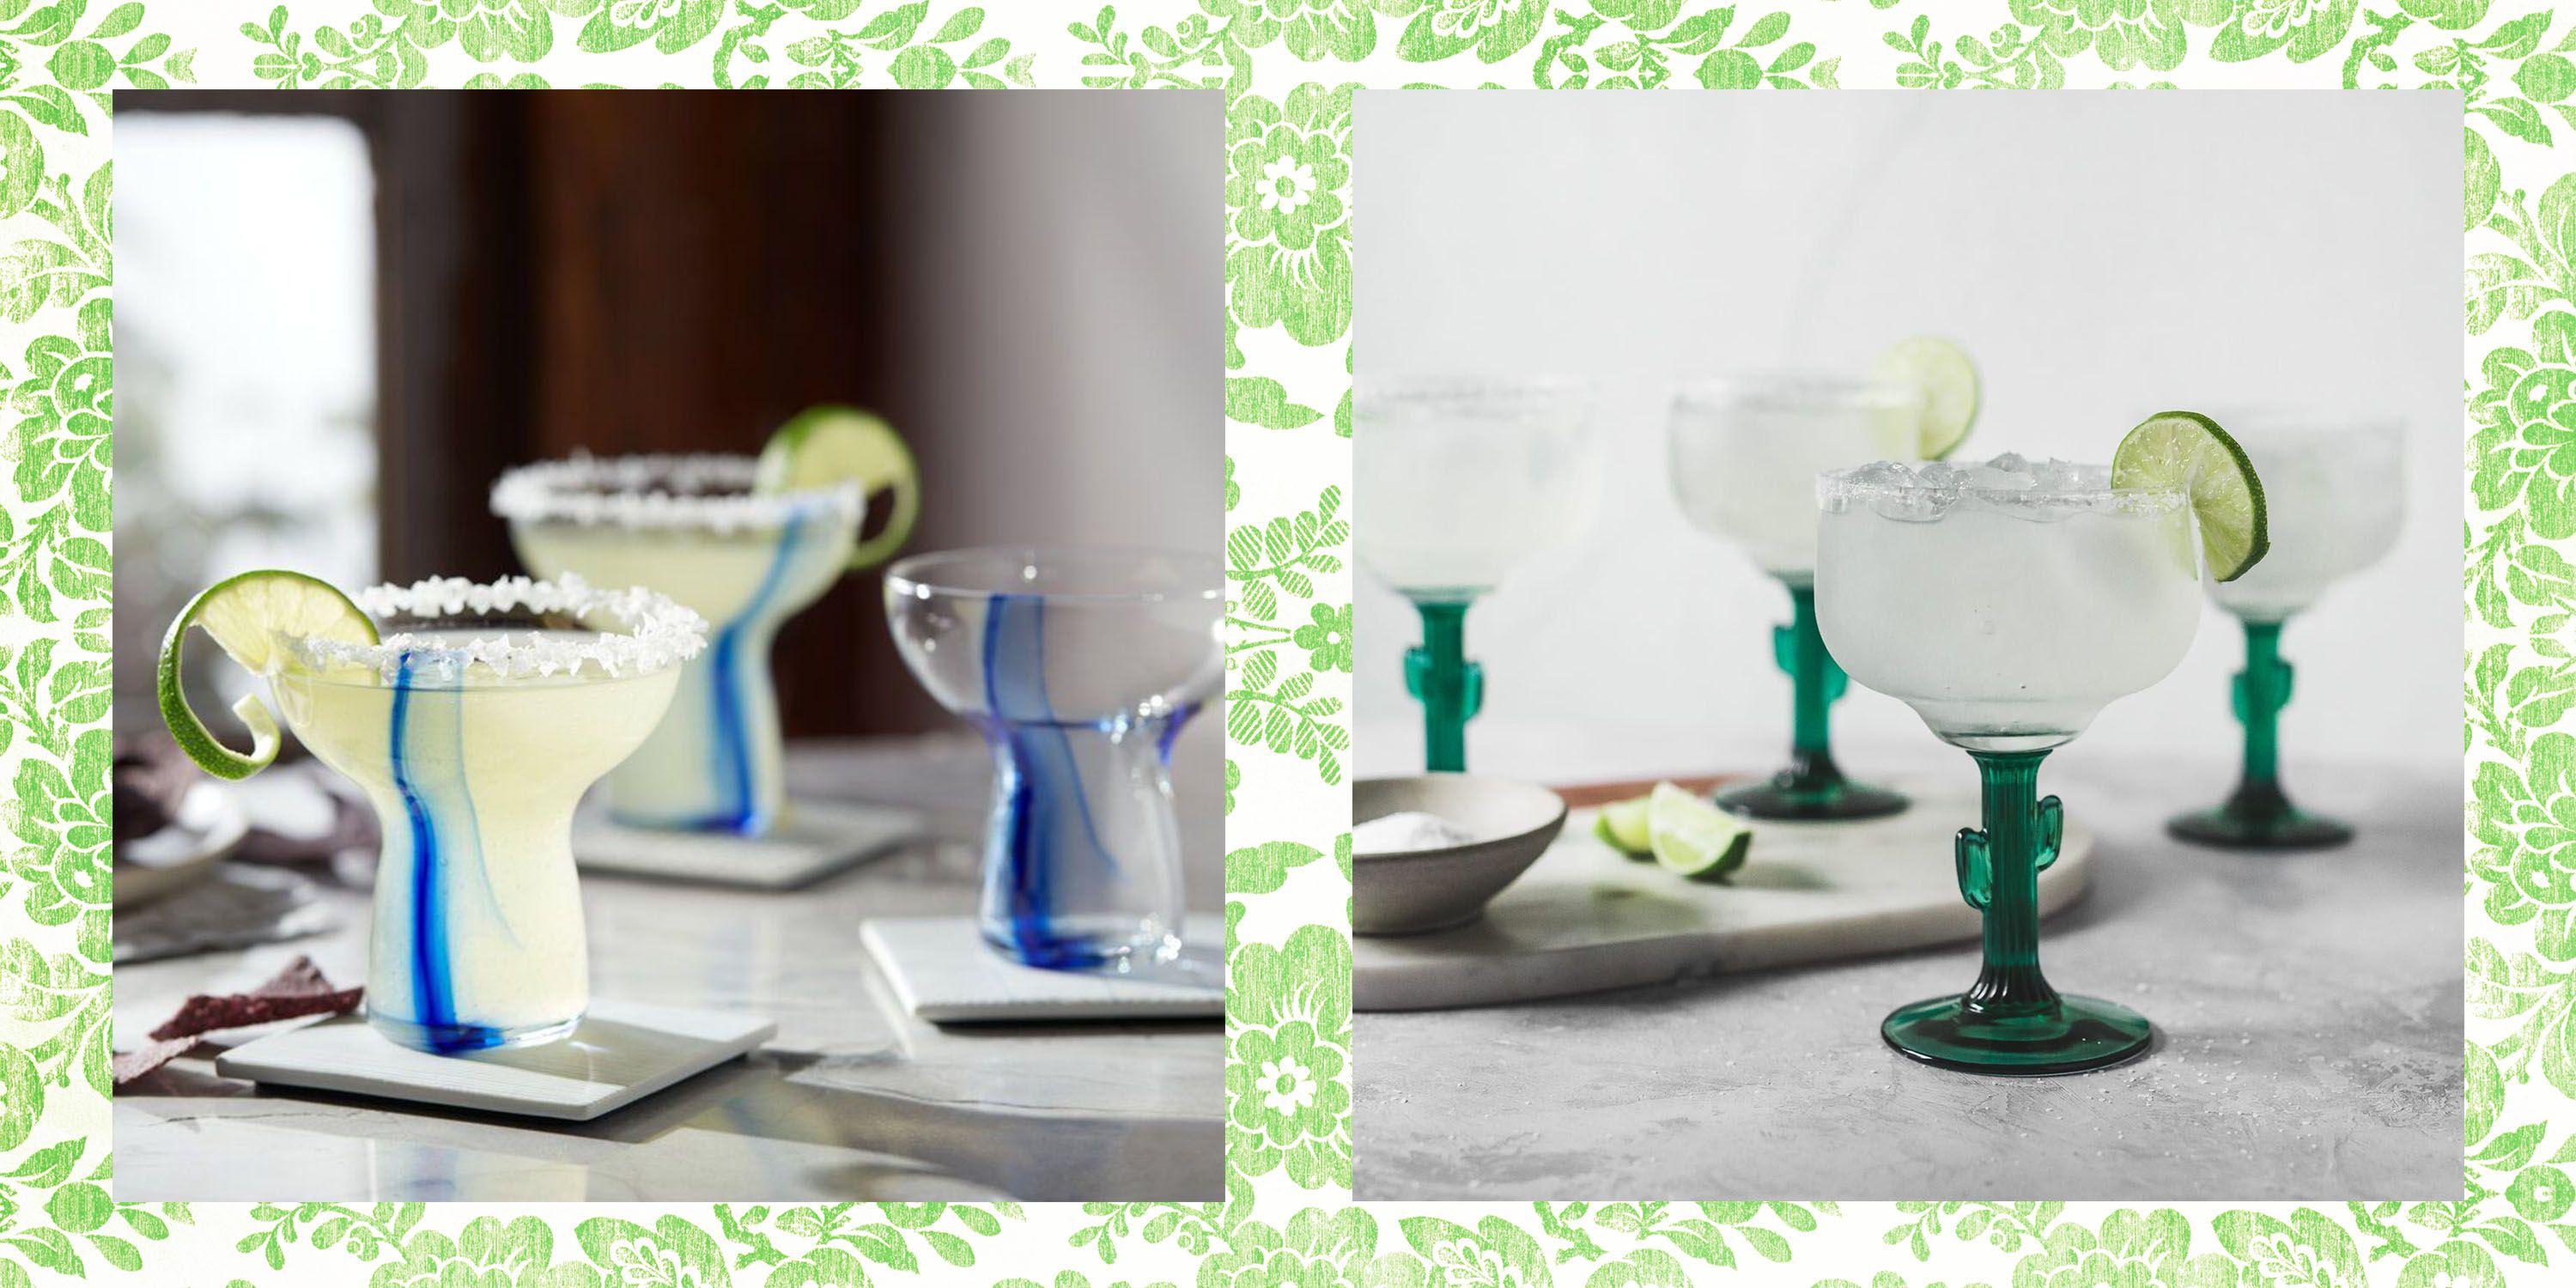 Margaritas Handblown Glass Blue Cocktail Drinkware Set of 4 - Happy Hour